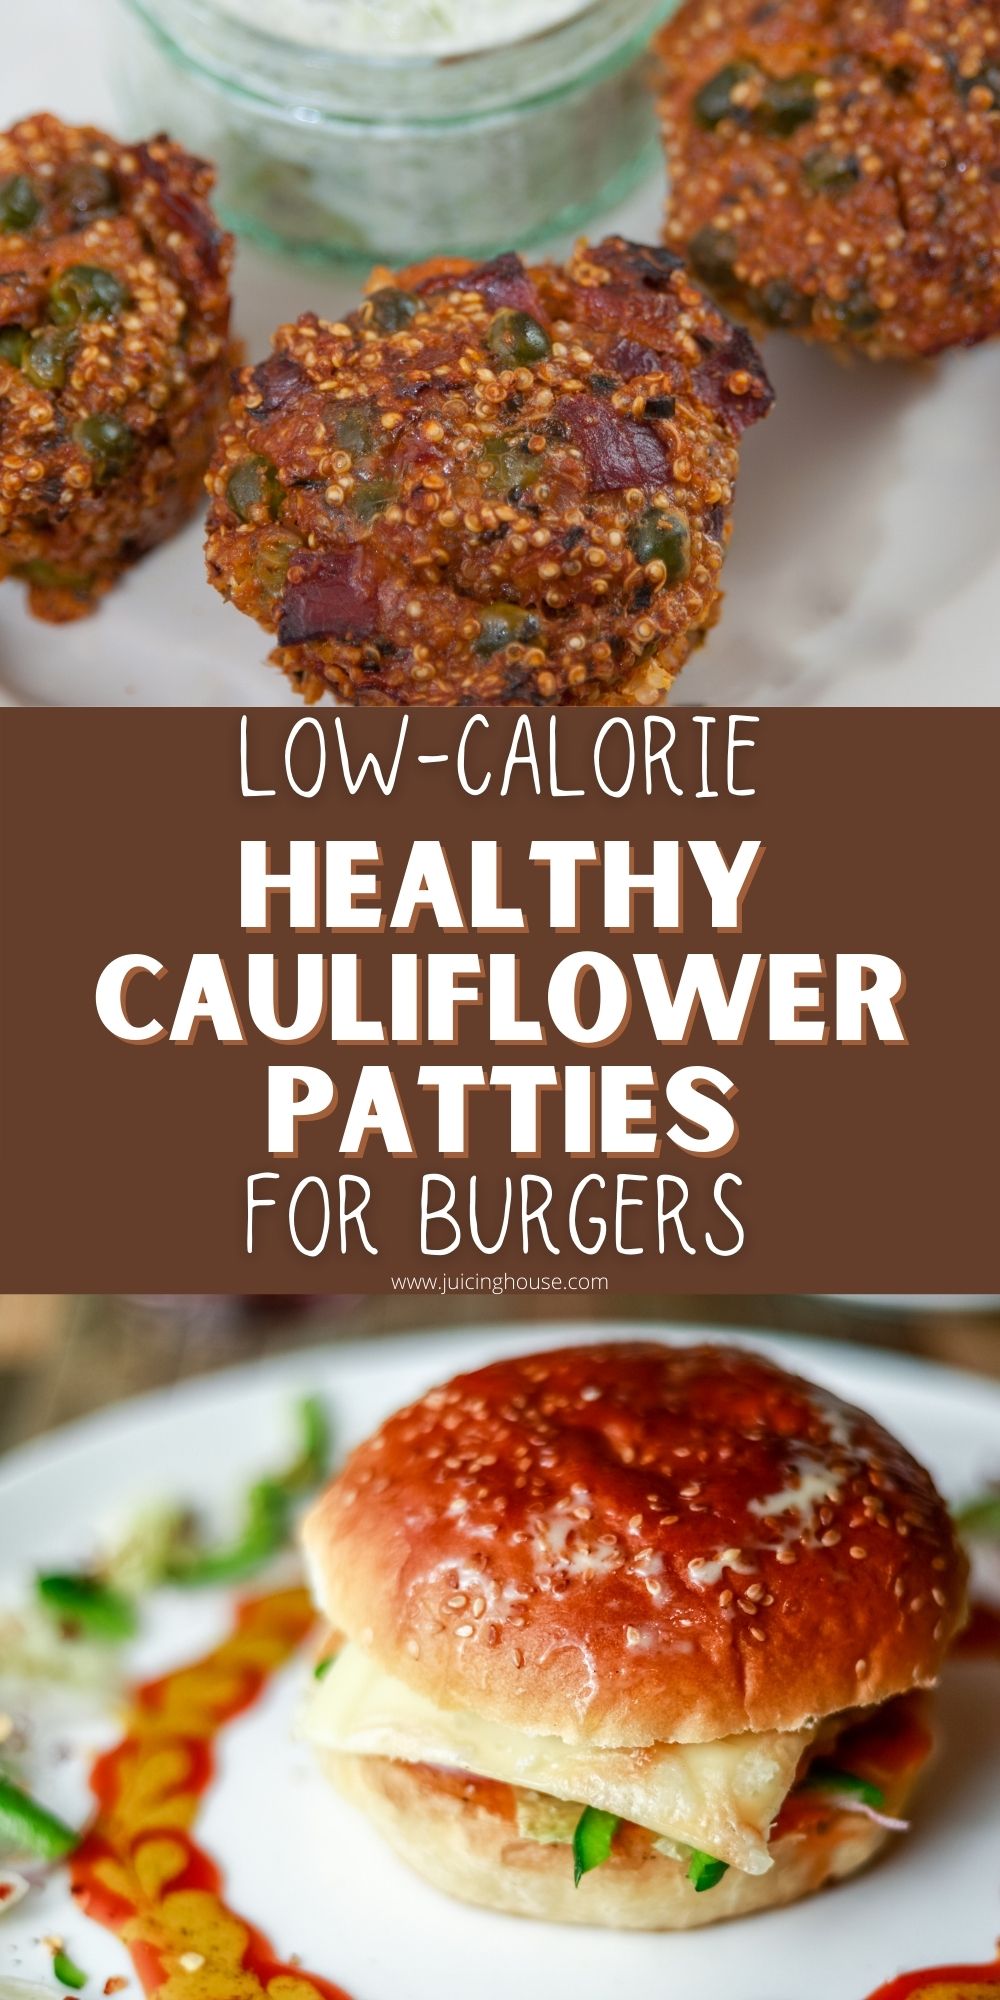 Low-Calorie Healthy Cauliflower Patties for Burgers